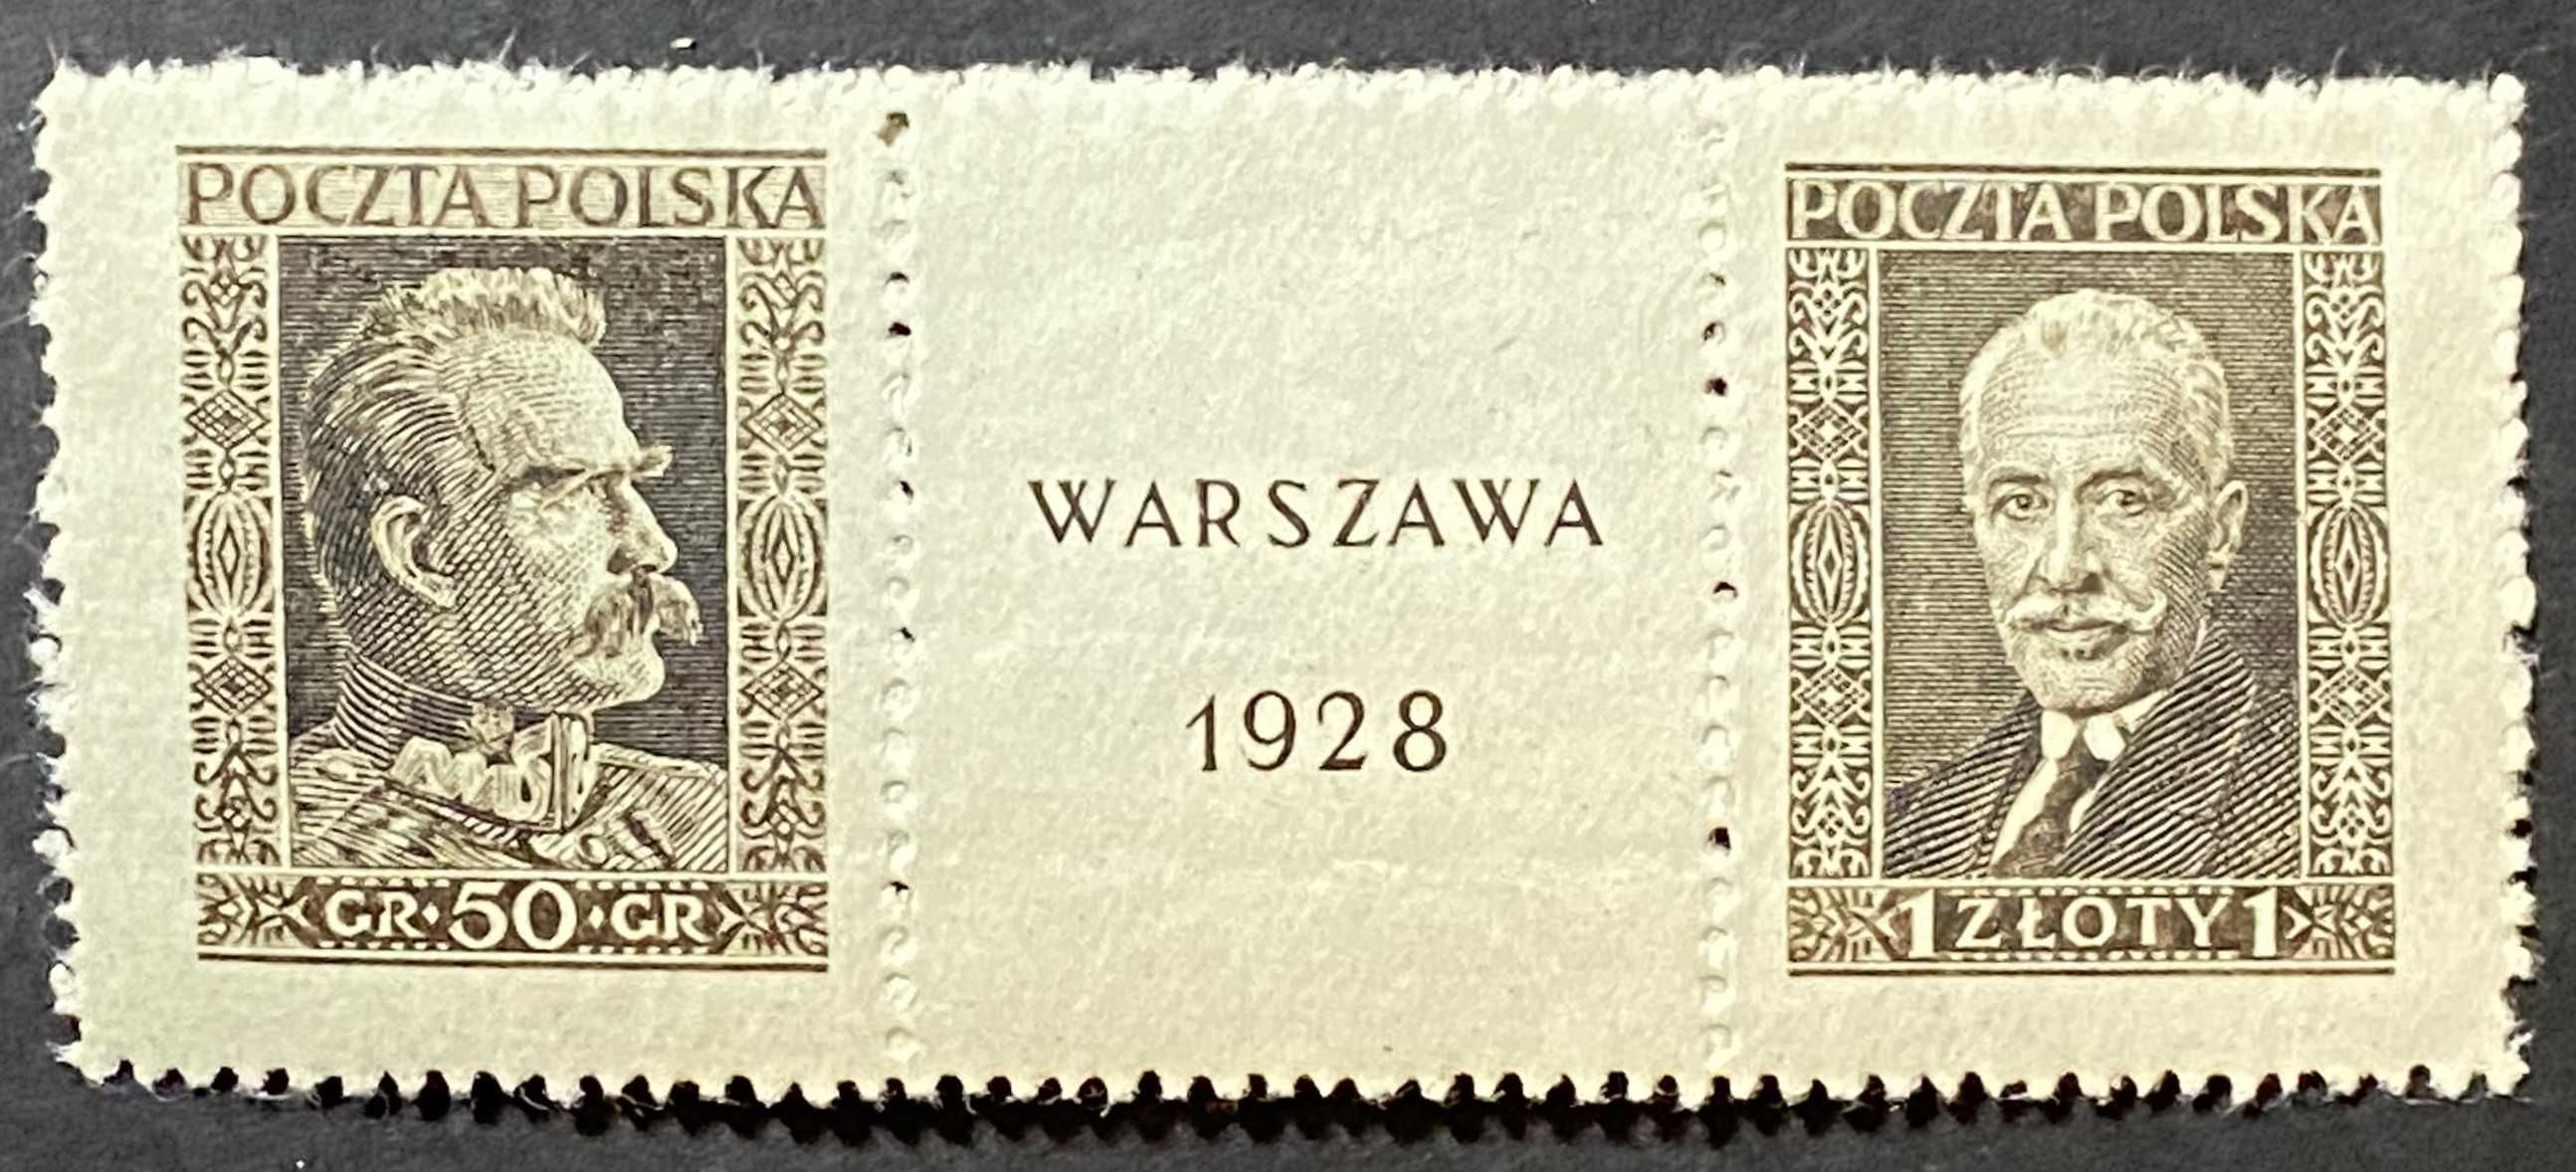 Znaczki polska Fi 235 236 pasek z bloku nr 1 1928r